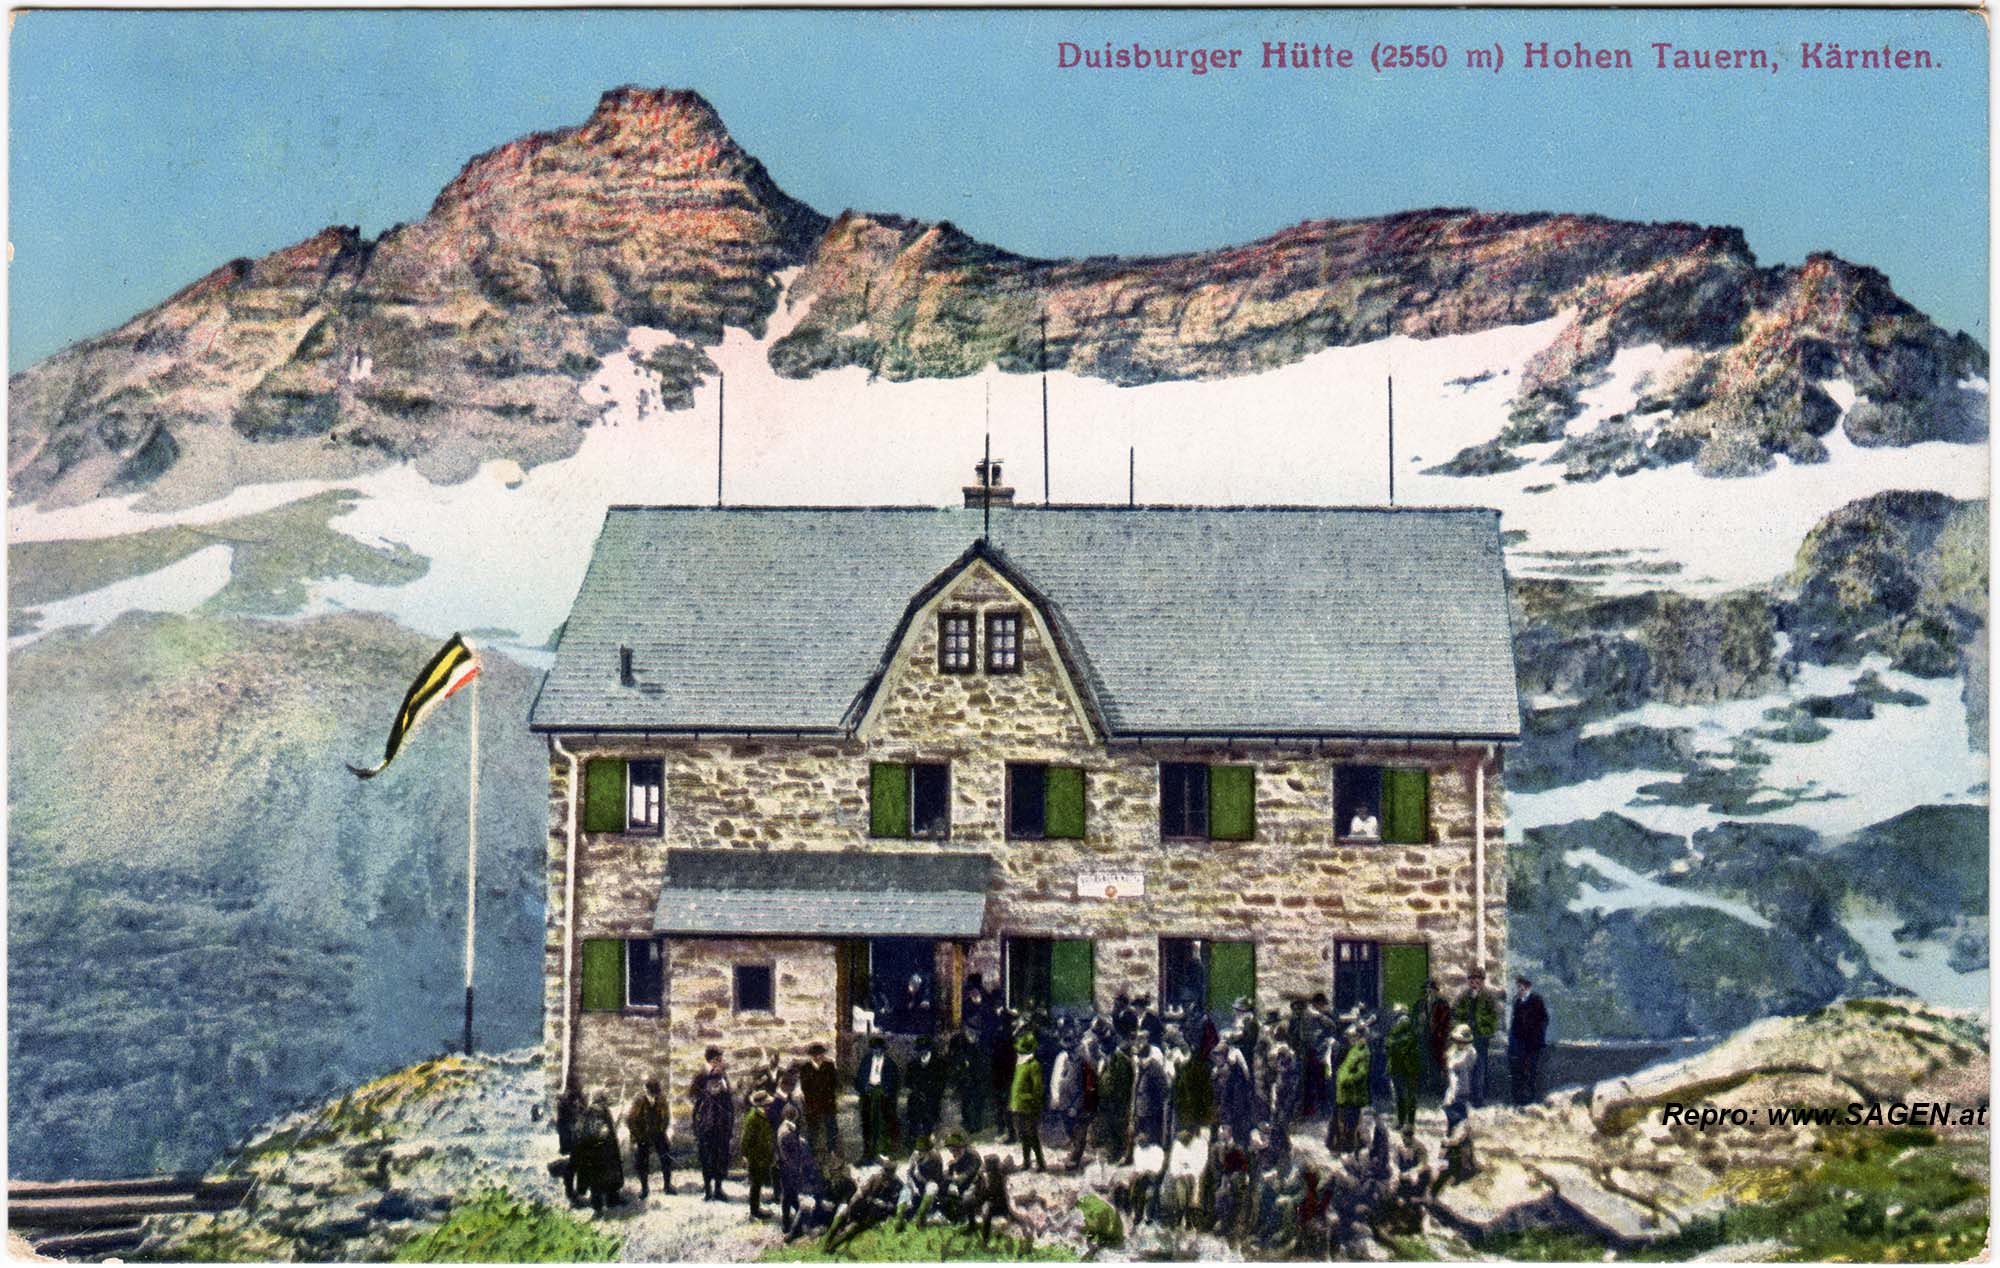 Duisburger Hütte, Hohe Tauern, Kärnten